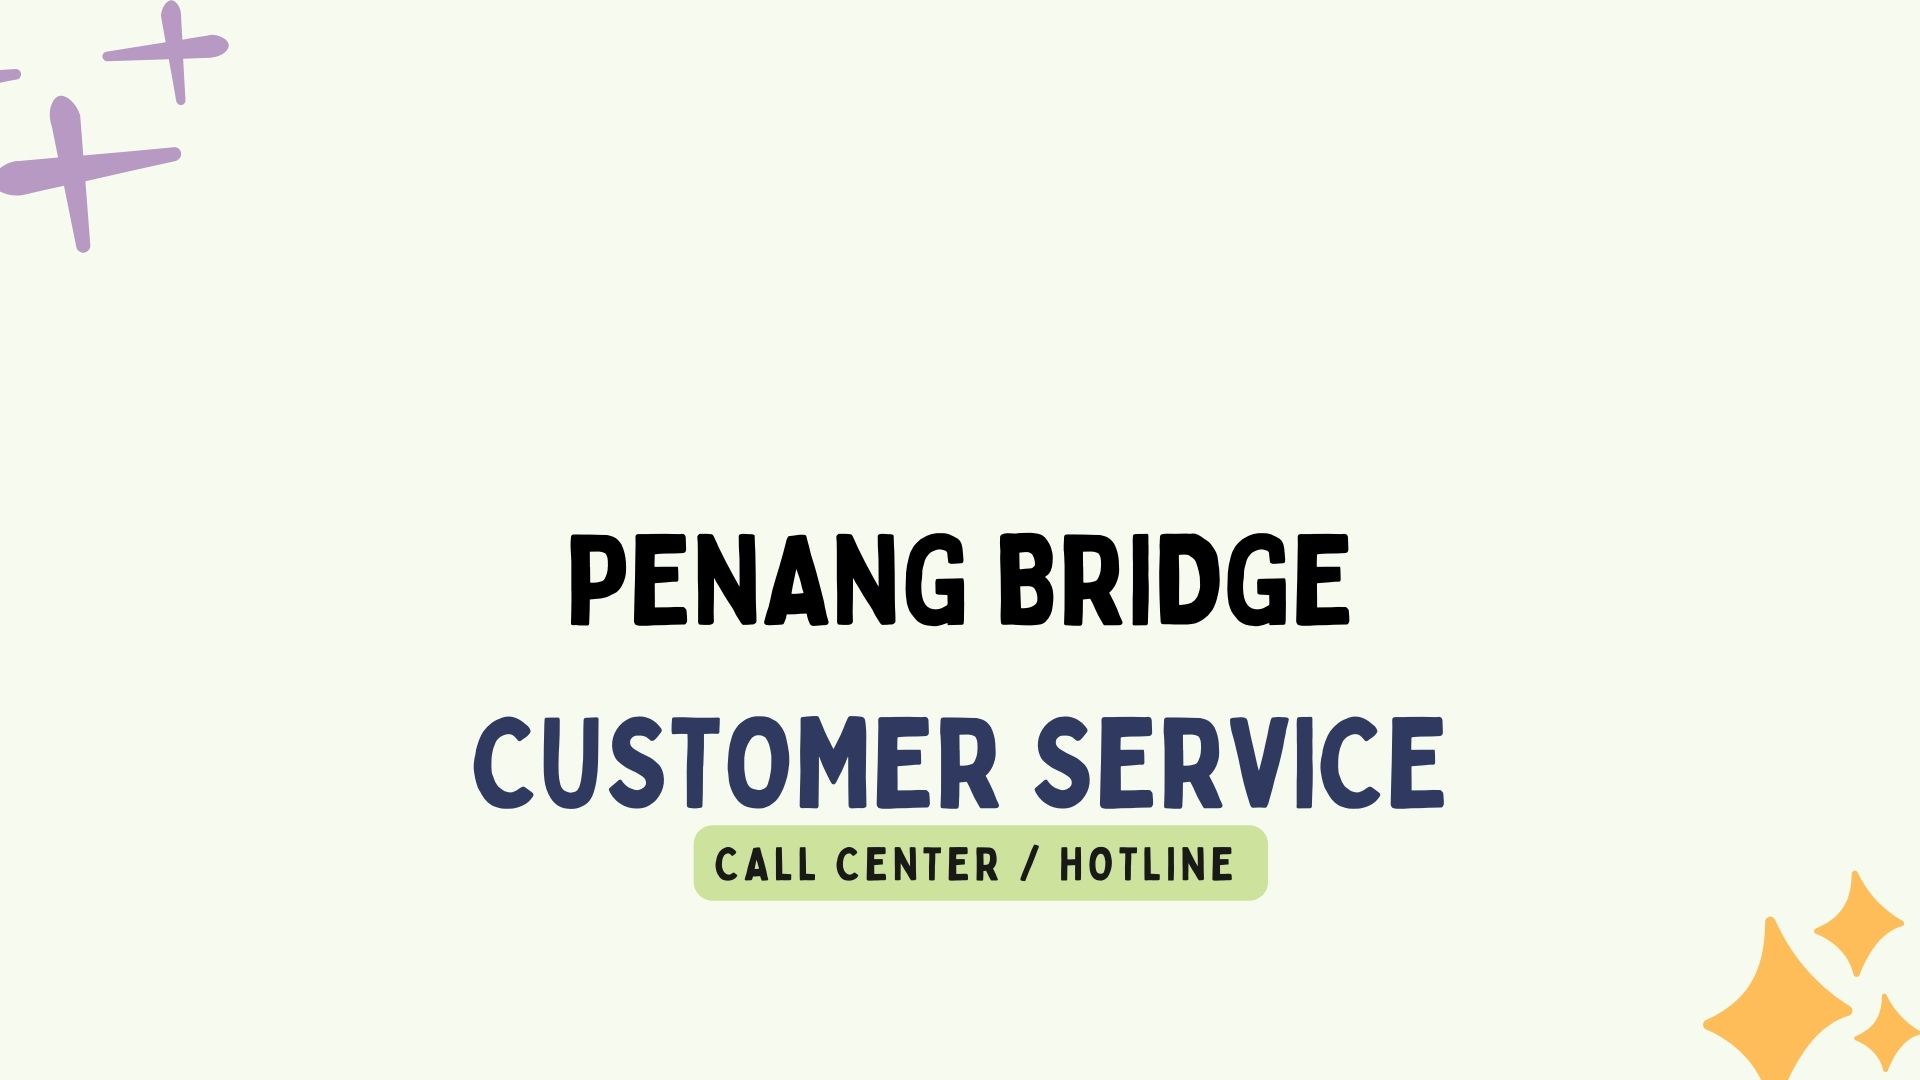 Penang Bridge Contact